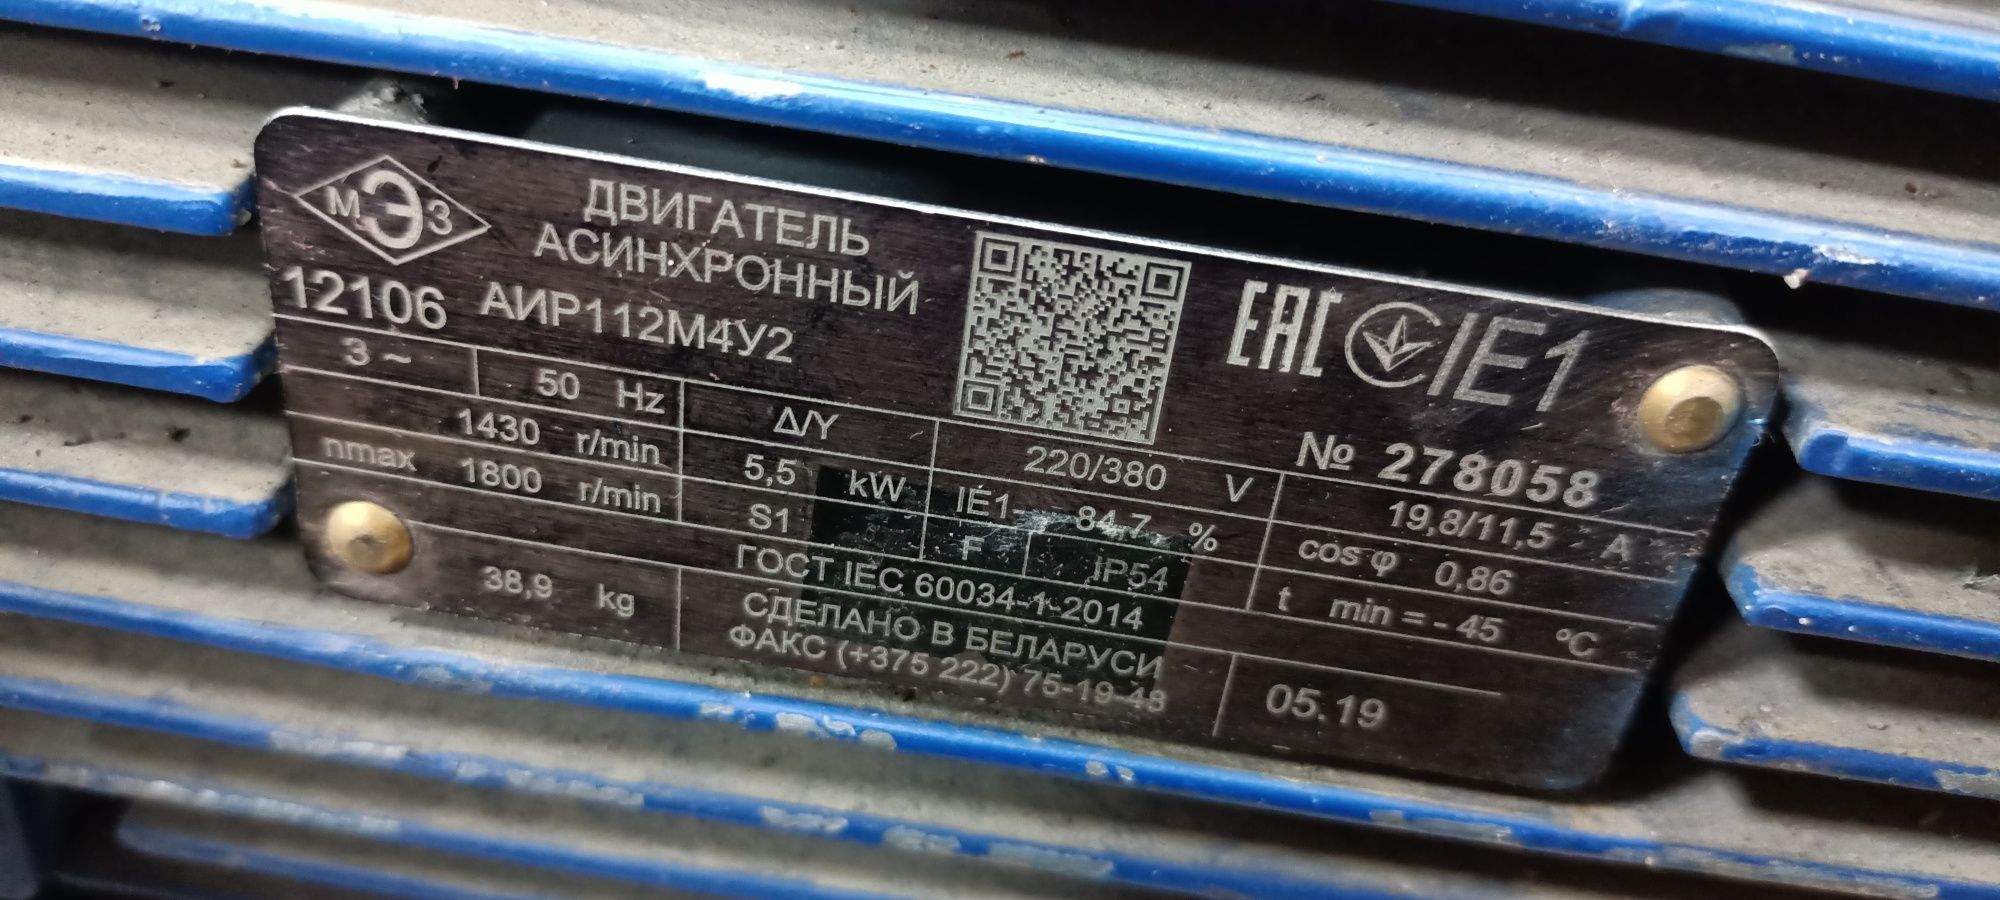 Електродвигун 5.5 квт 1500 об. новий білоруський Электродвигатель аир